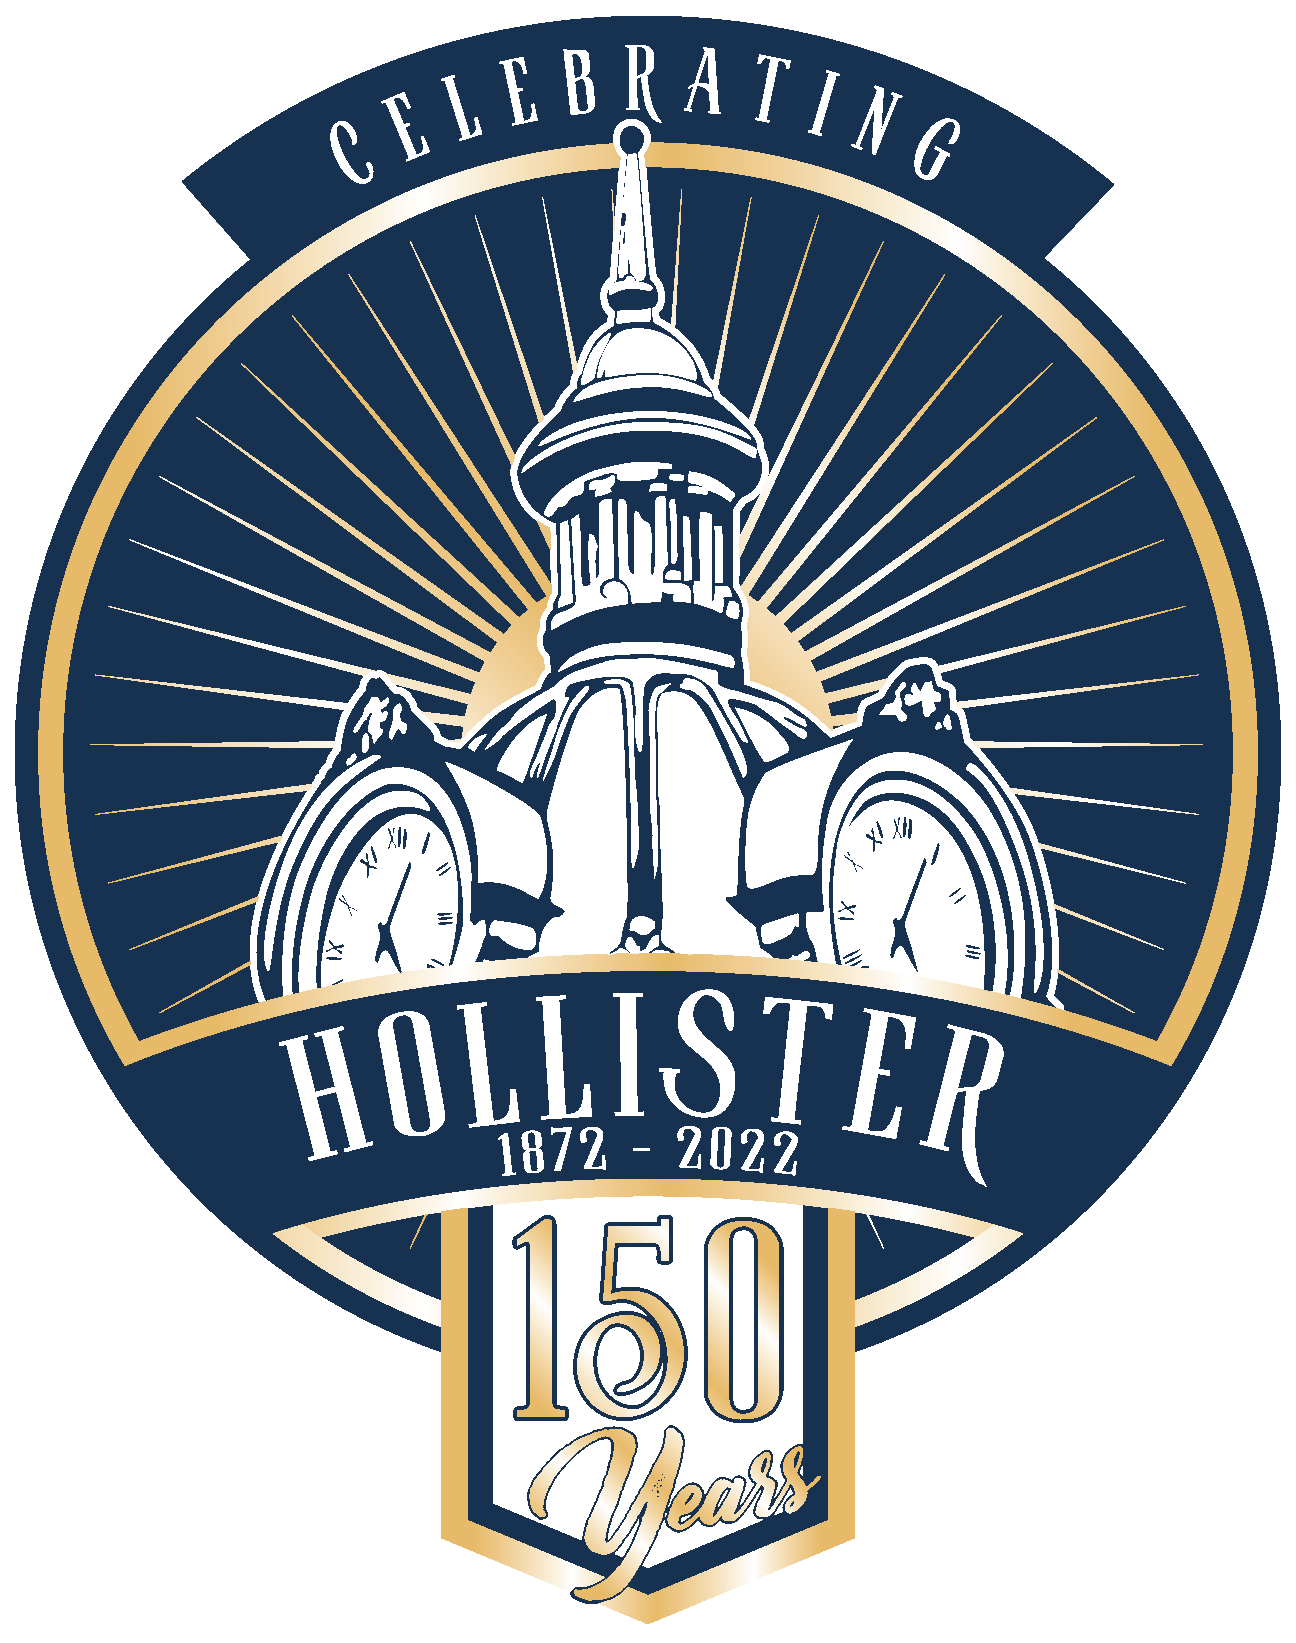 City of Hollister 150th Anniversary Logo